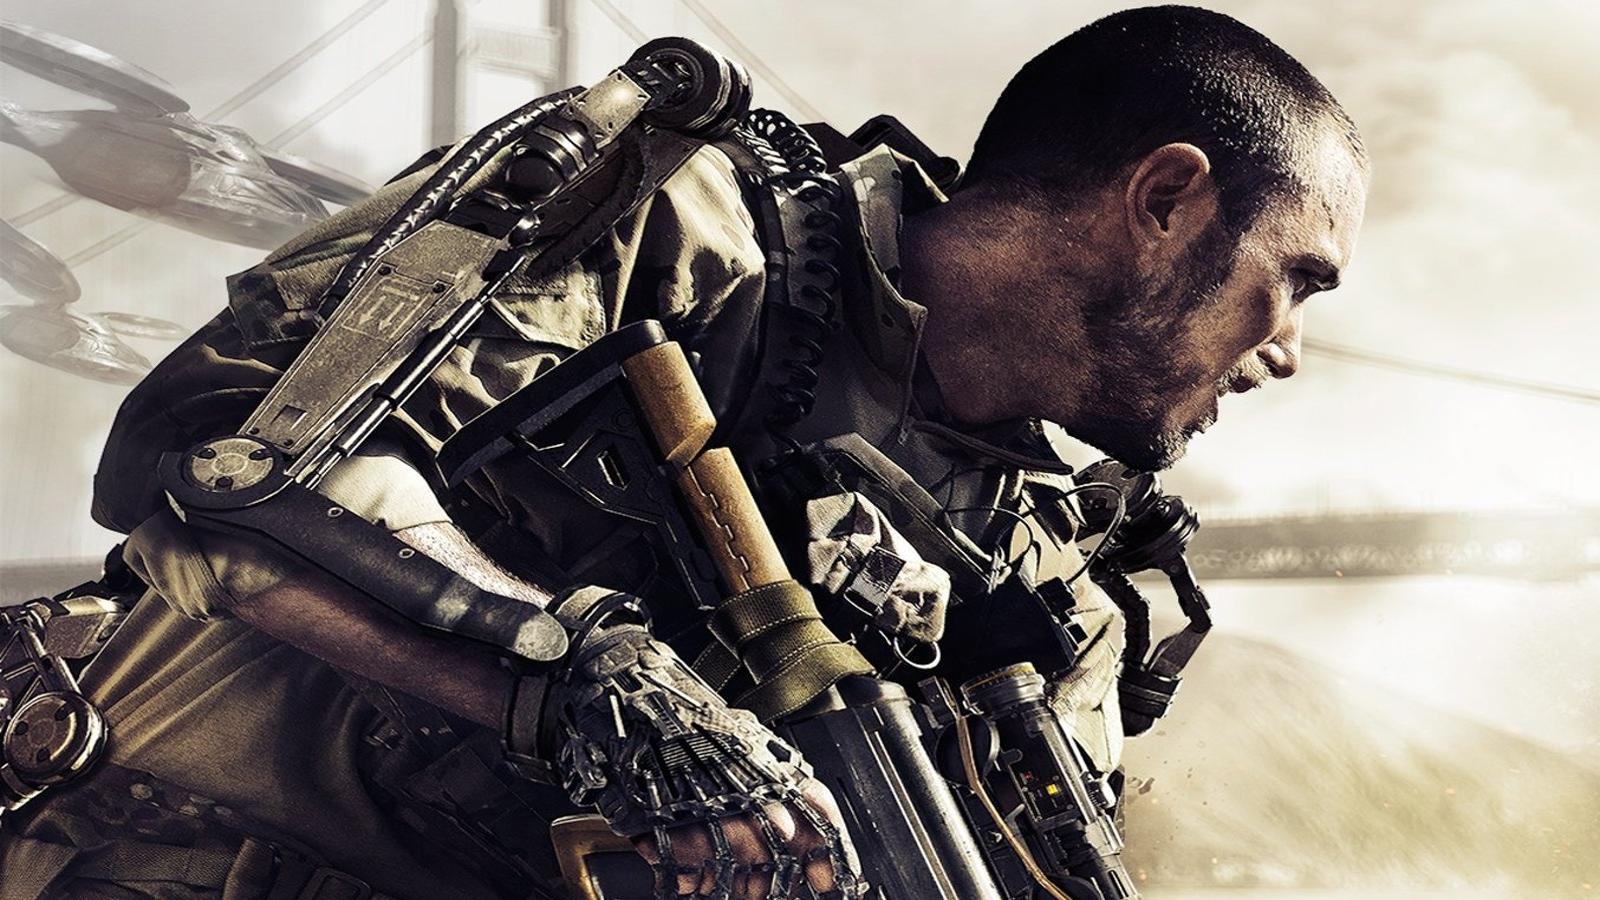 Call of Duty: Infinite Warfare trailer reveals class-based